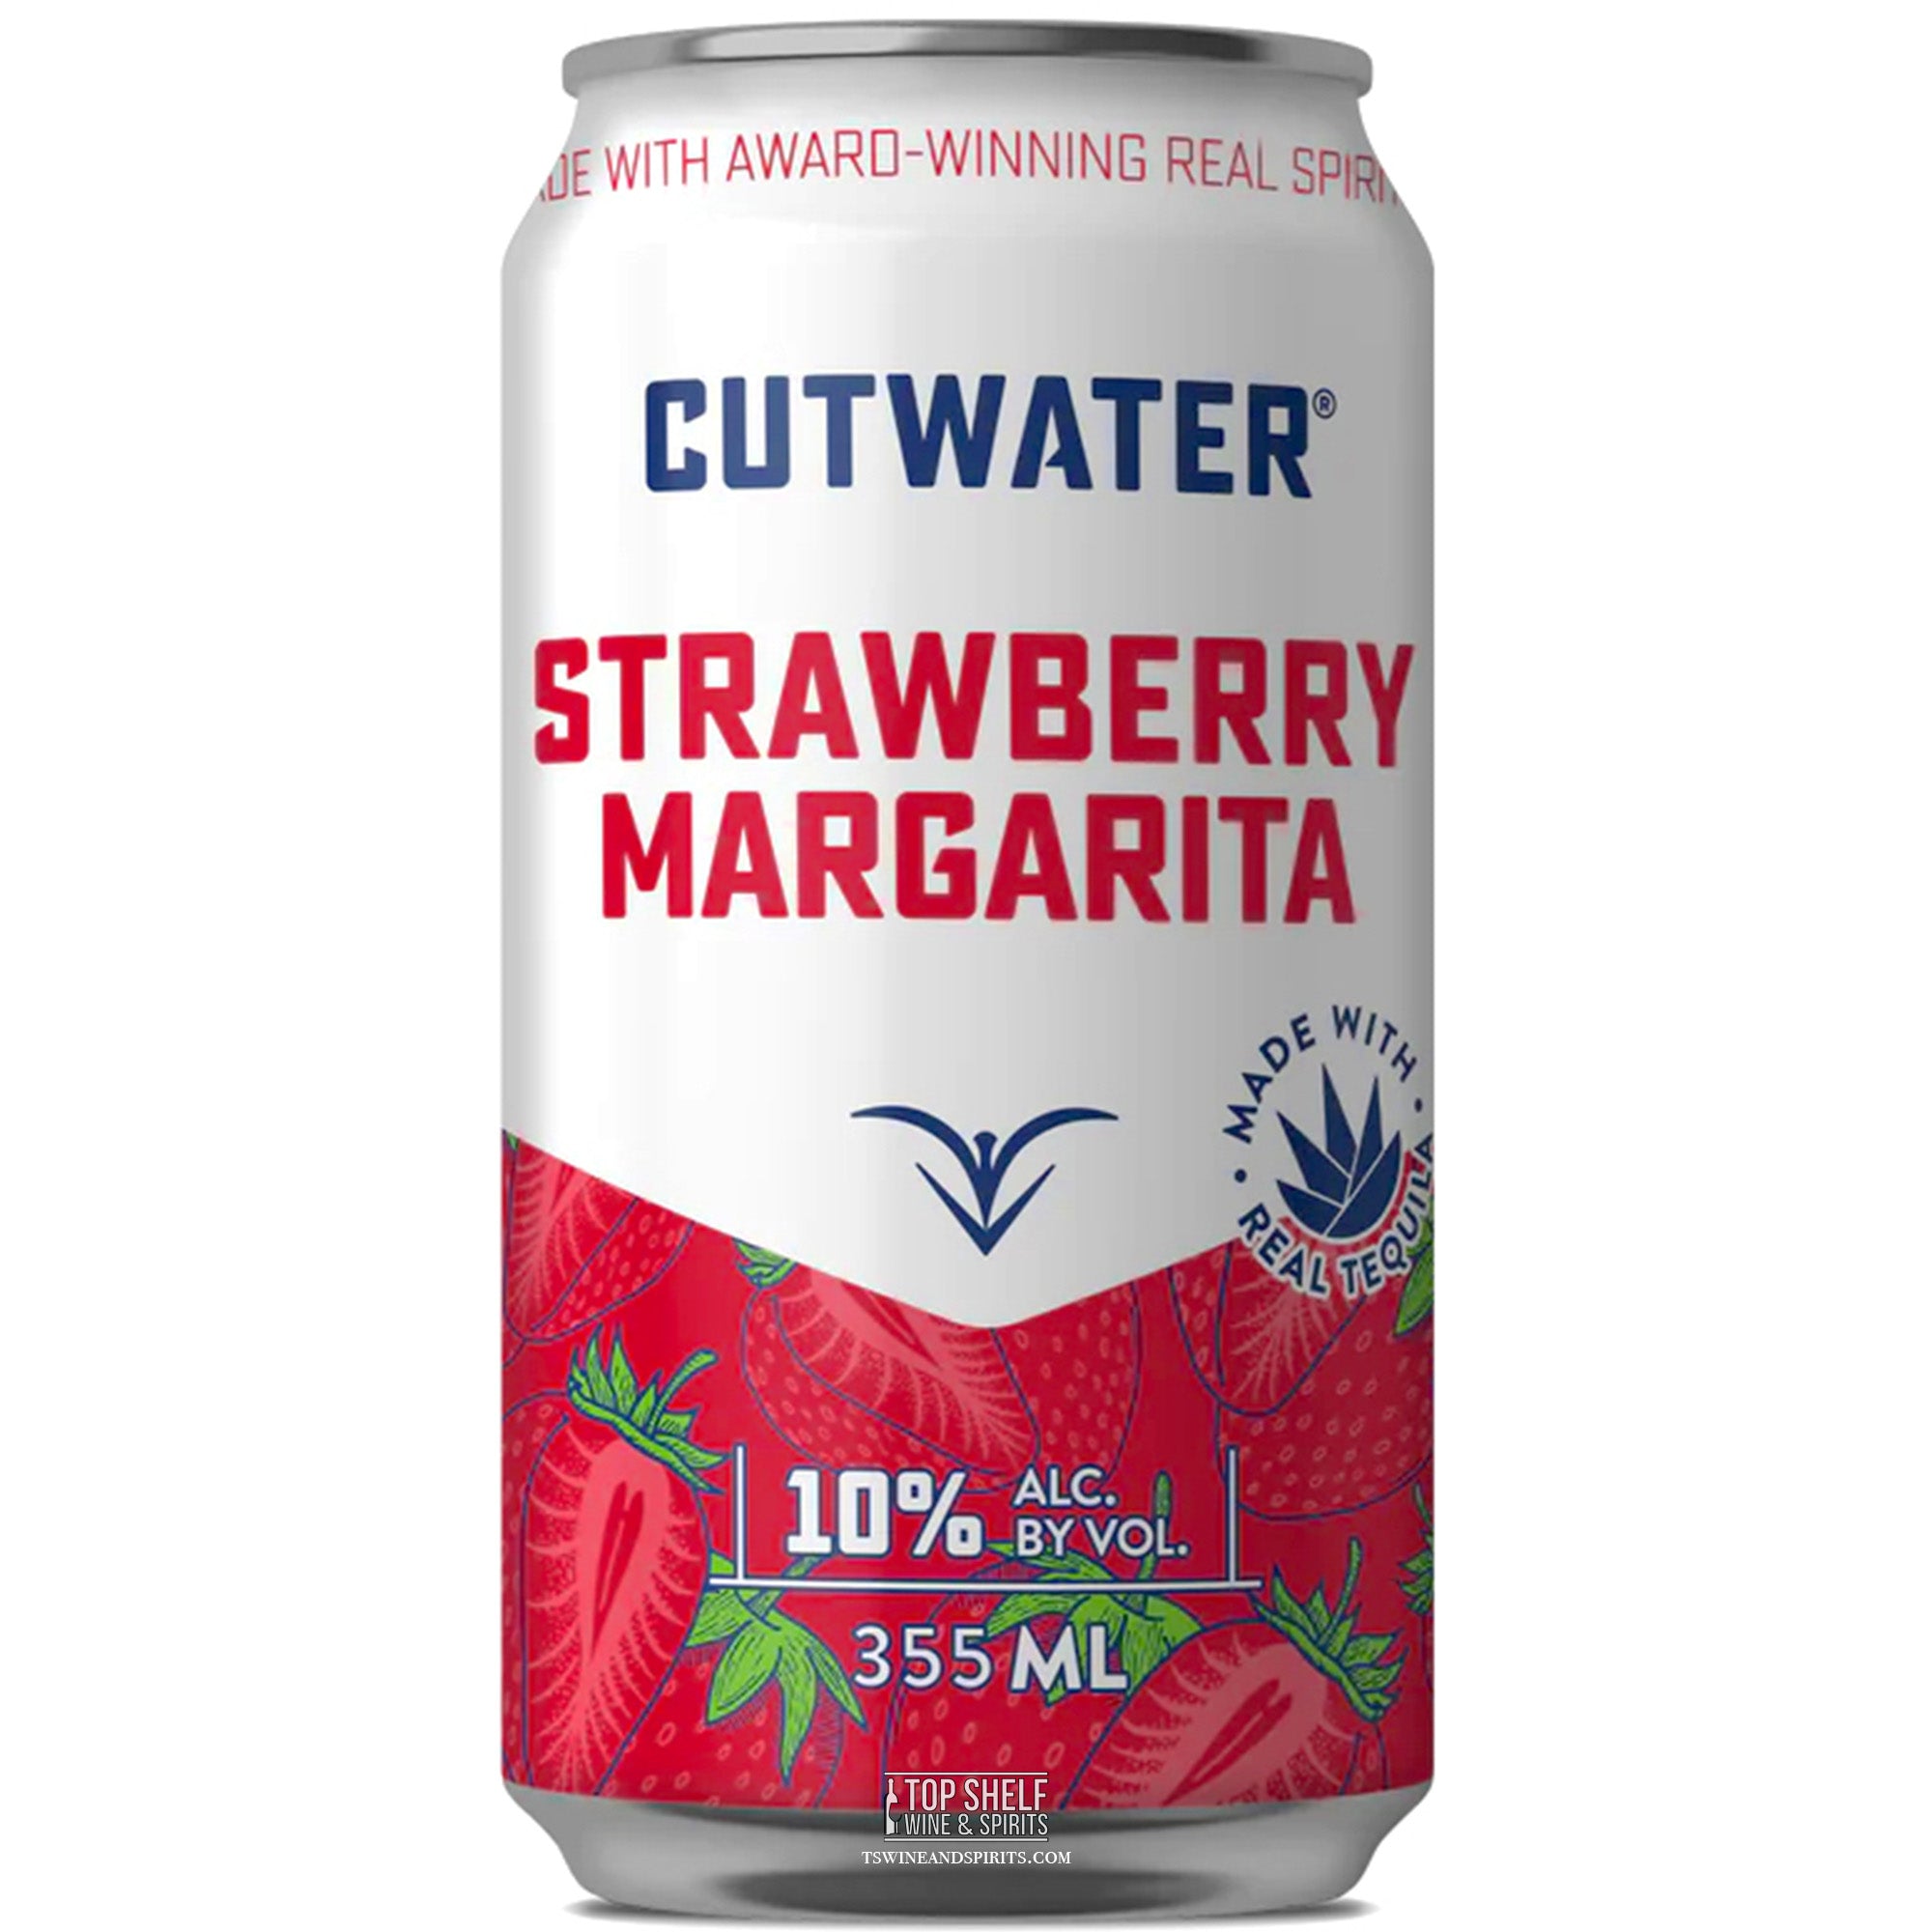 Cutwater Strawberry Margarita 4 pack